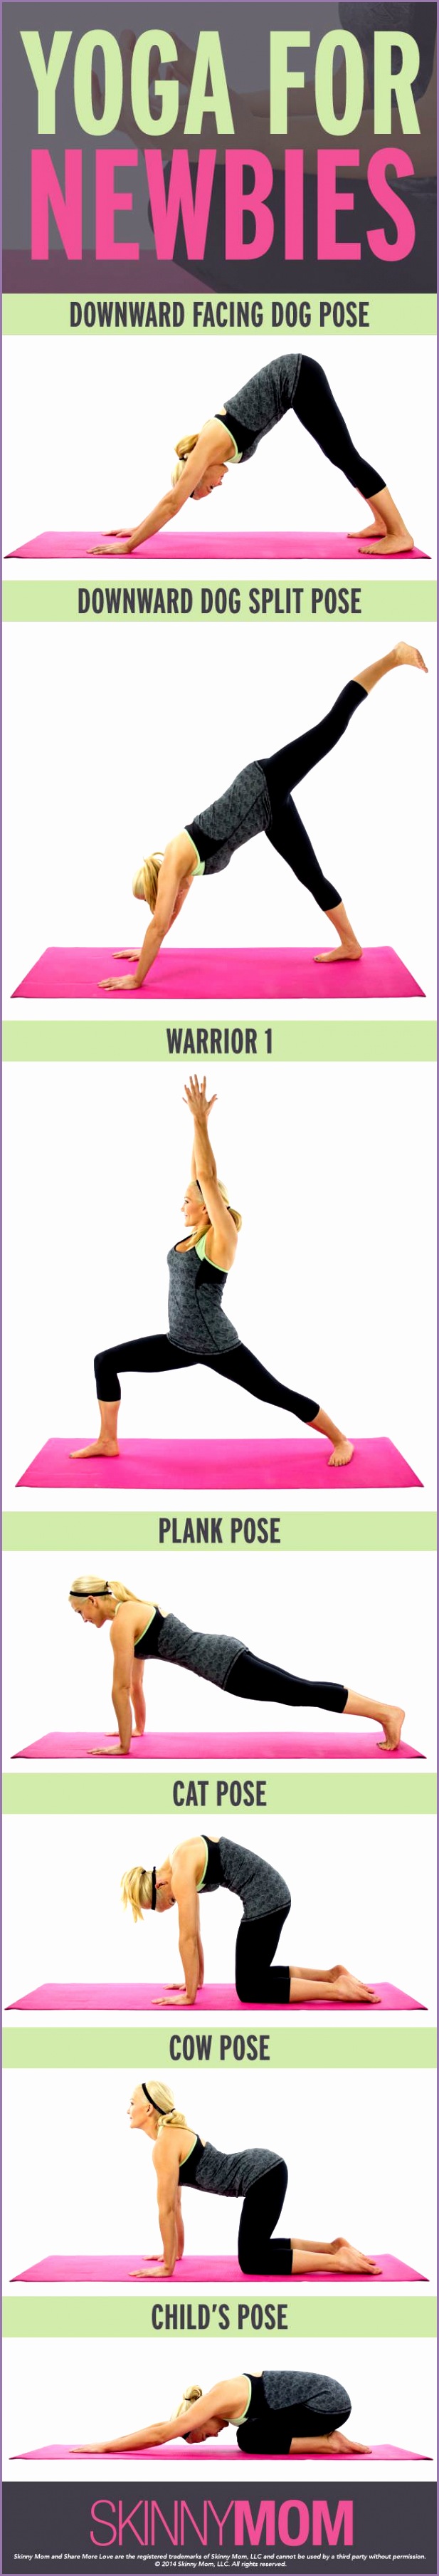 yoga can help stroke victims improve balance